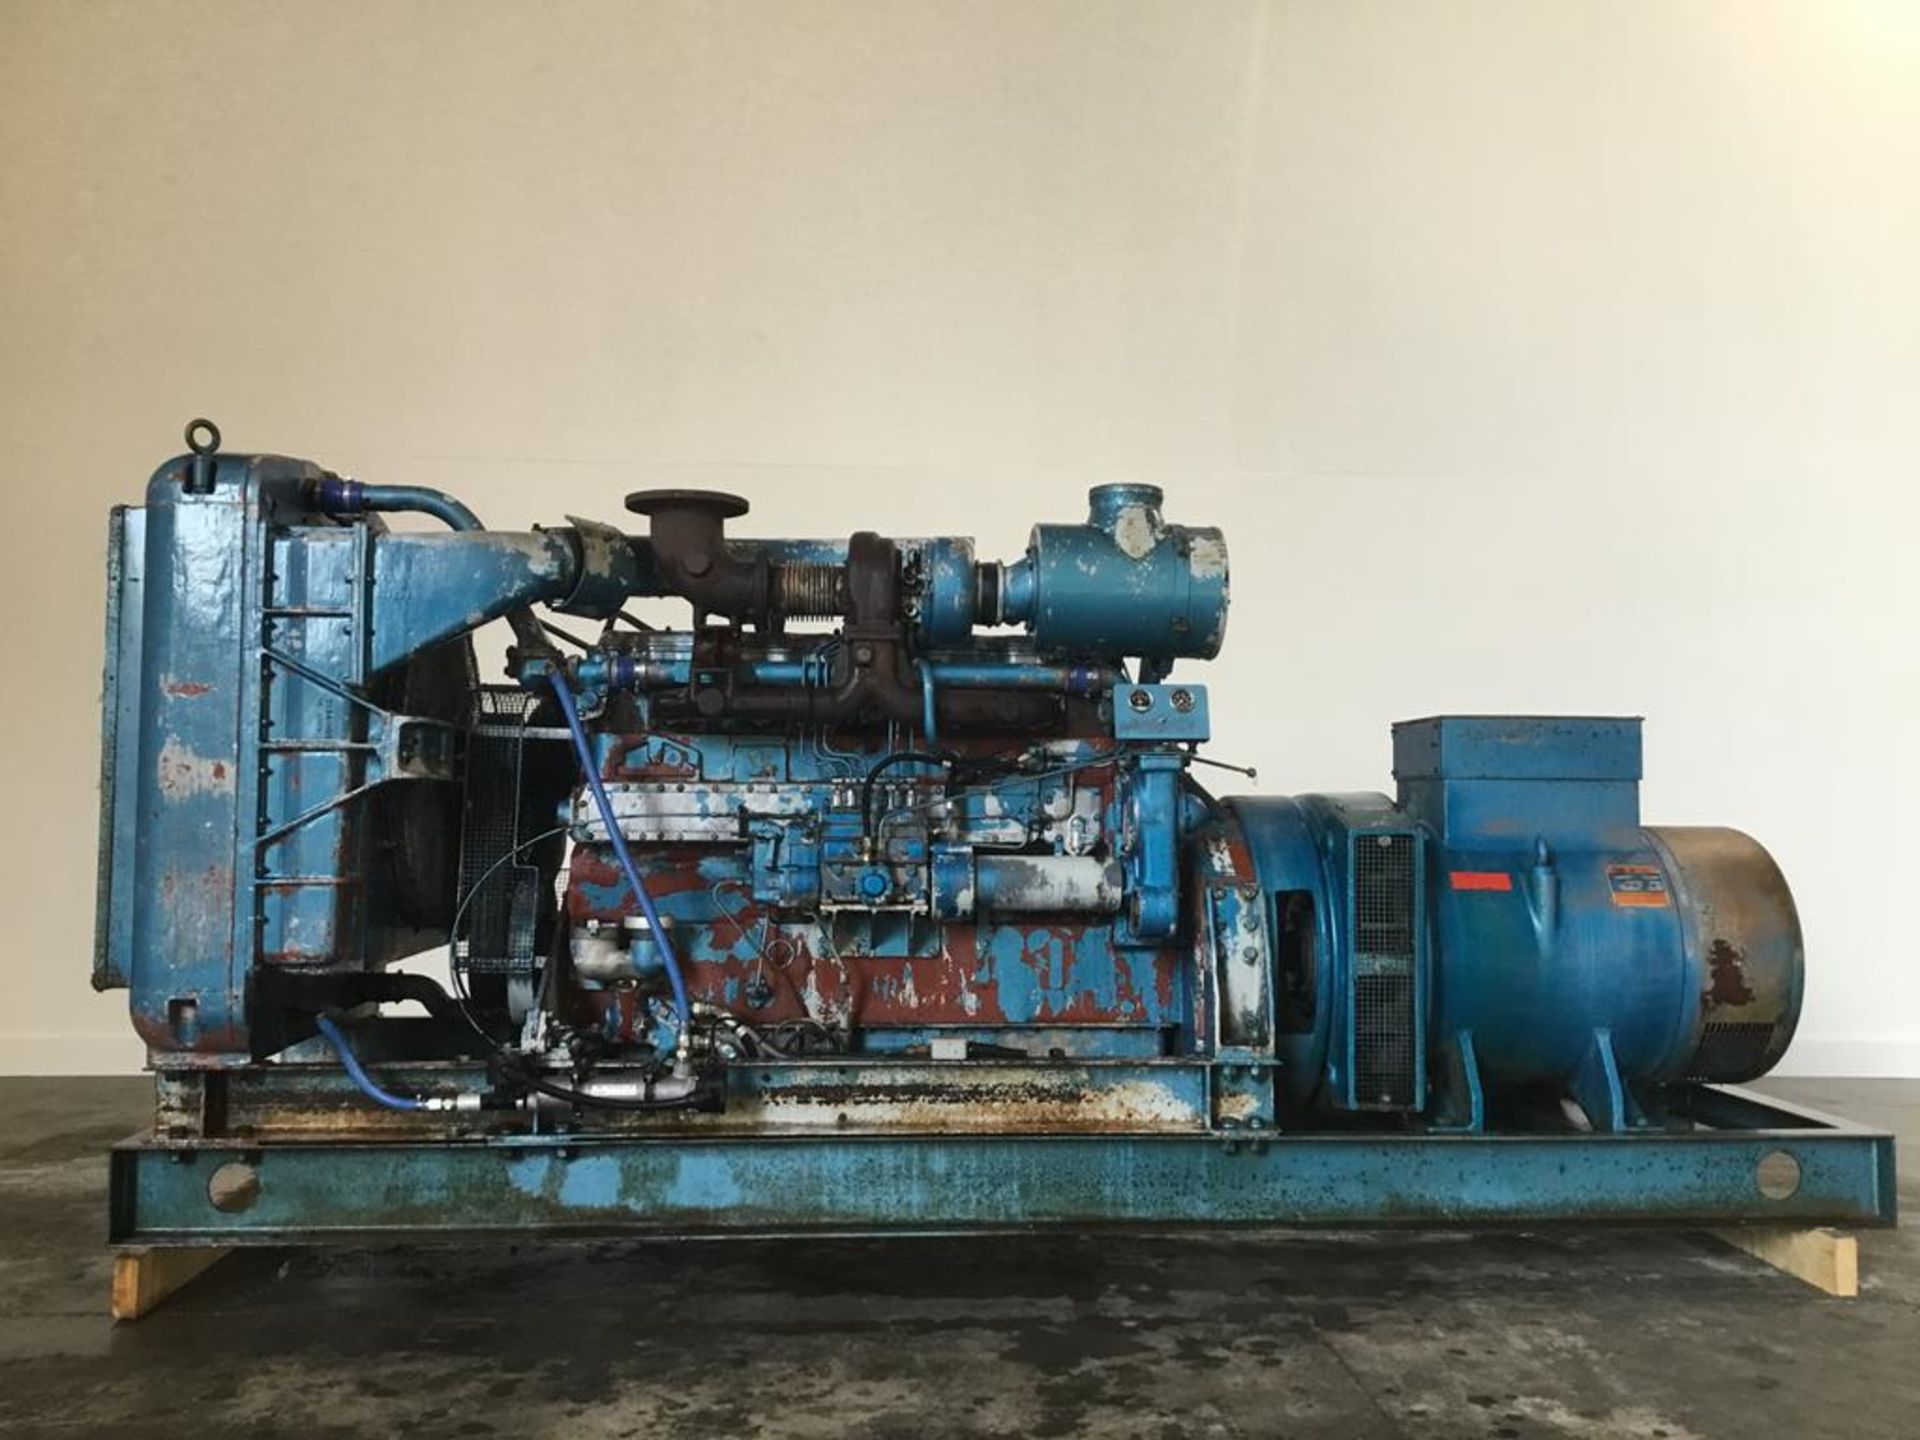 Dorman 325Kva Diesel Generator - Image 9 of 9